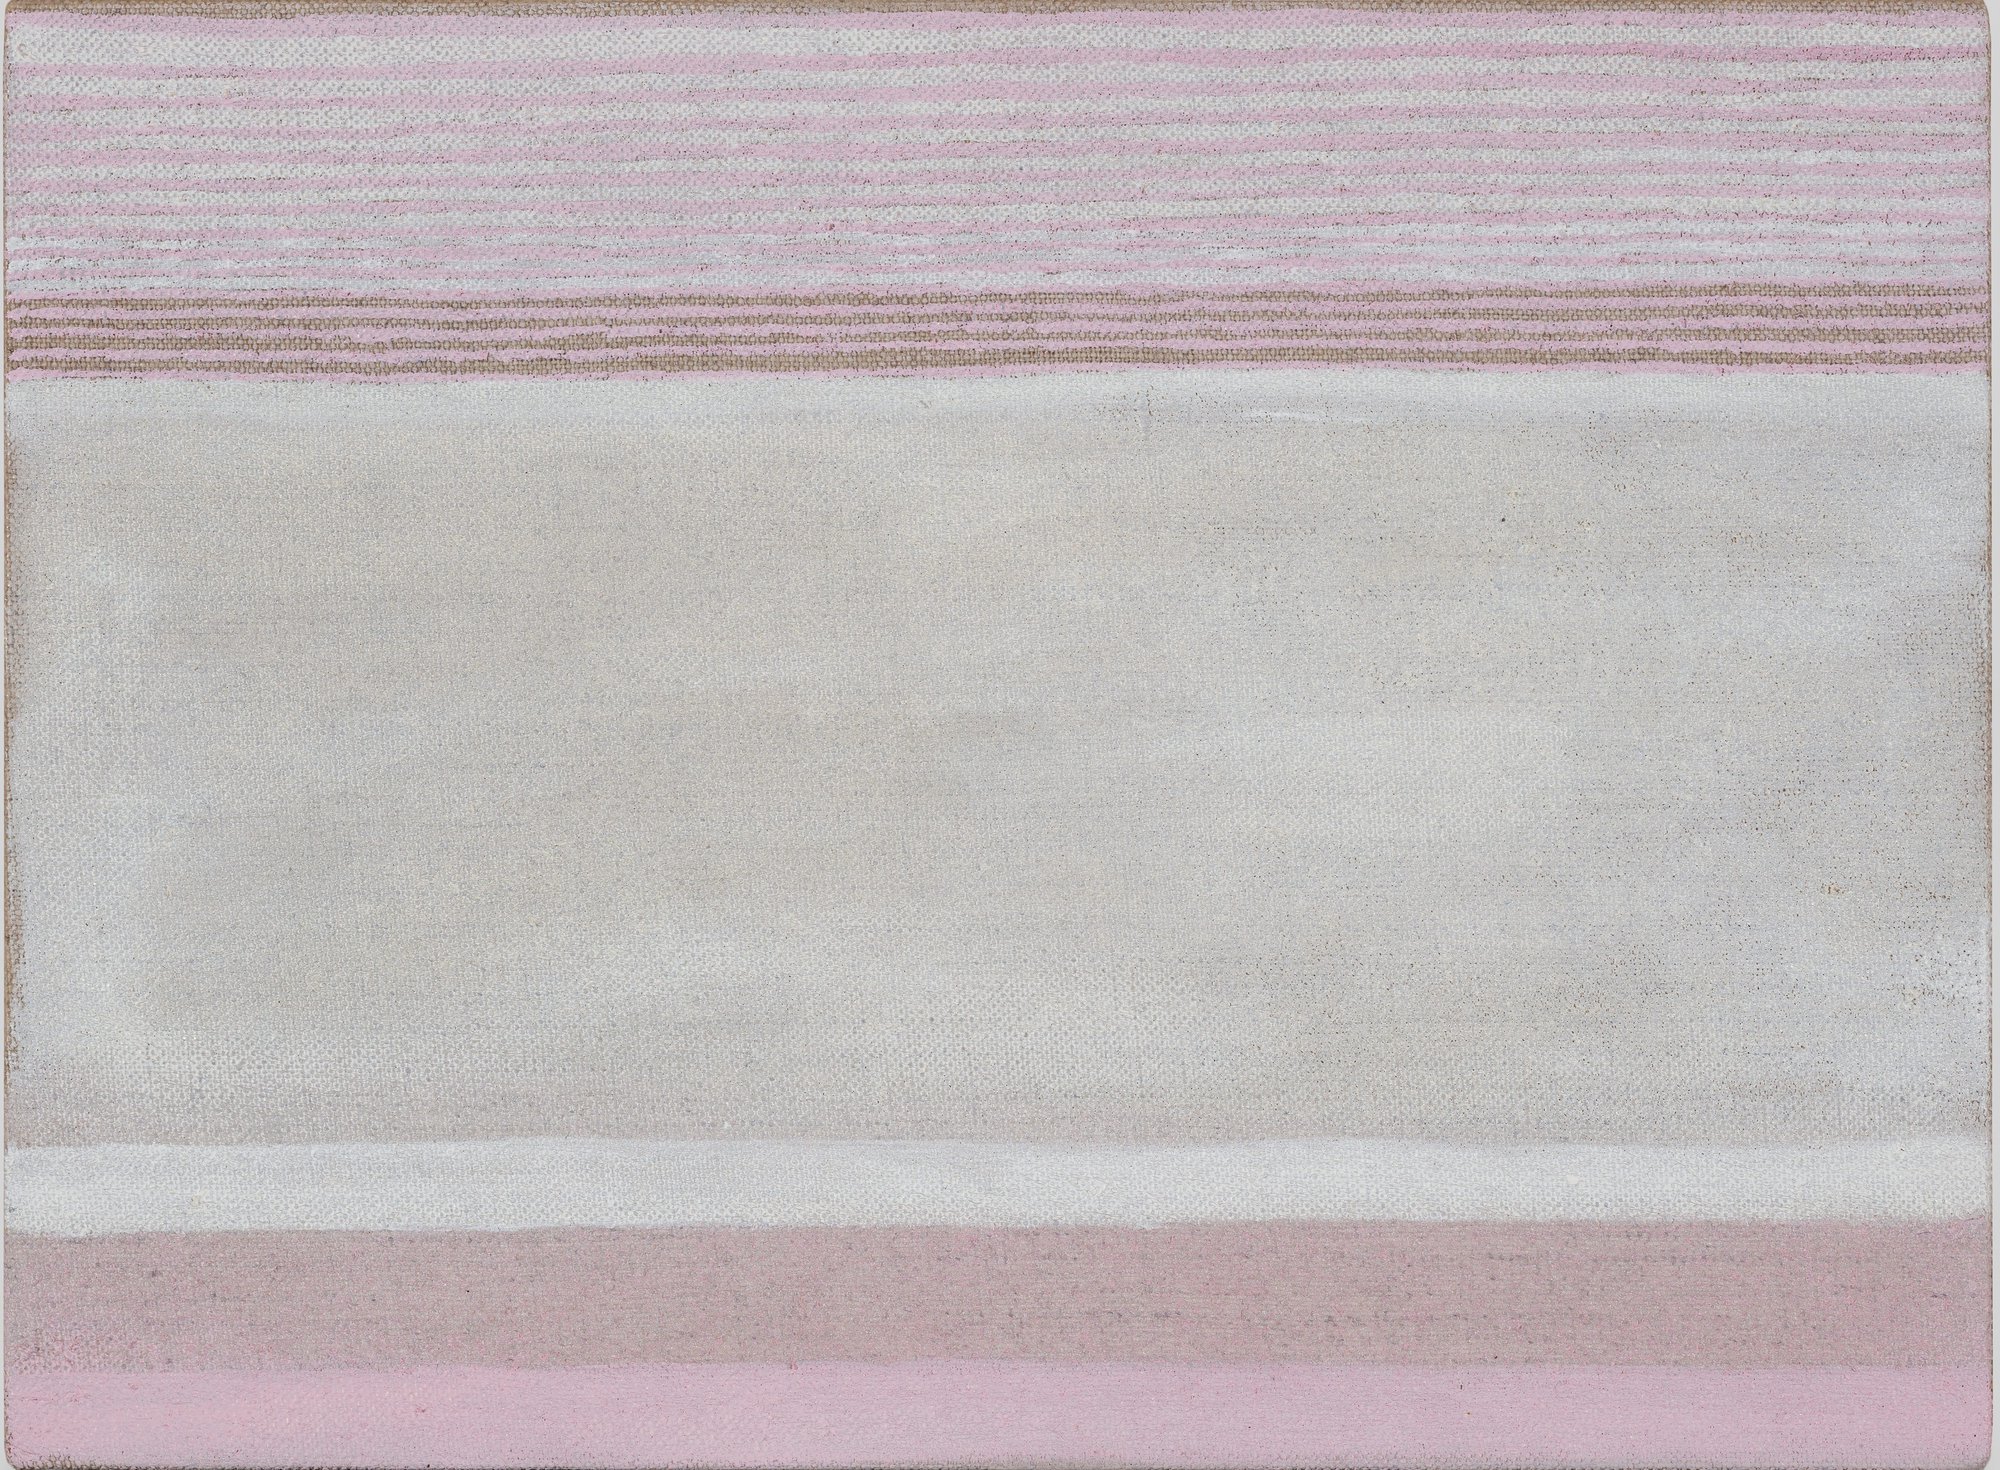 Leidy Churchman, The Between is Ringing (Bodhichitta Baby), oil on linen, 18 x 24.4 cm (7 1/8 x 9 5/8 in), 2020